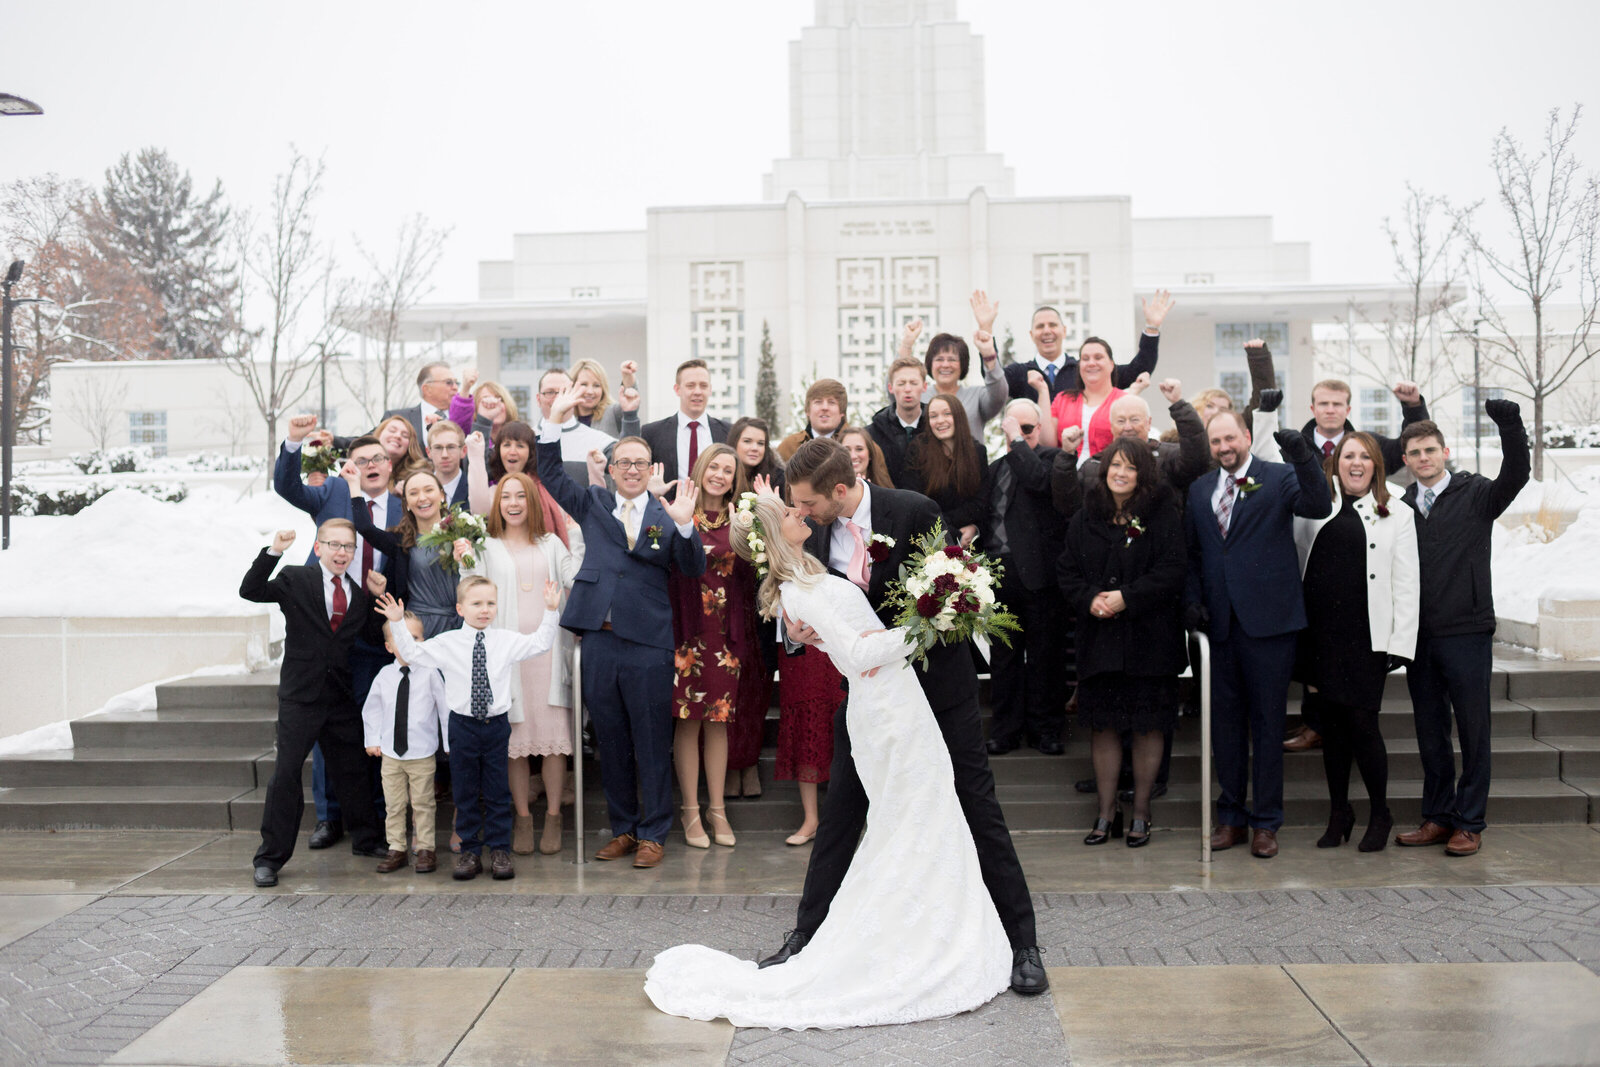 Washington Elopement Photographer captures man and woman celebrating recent marriage